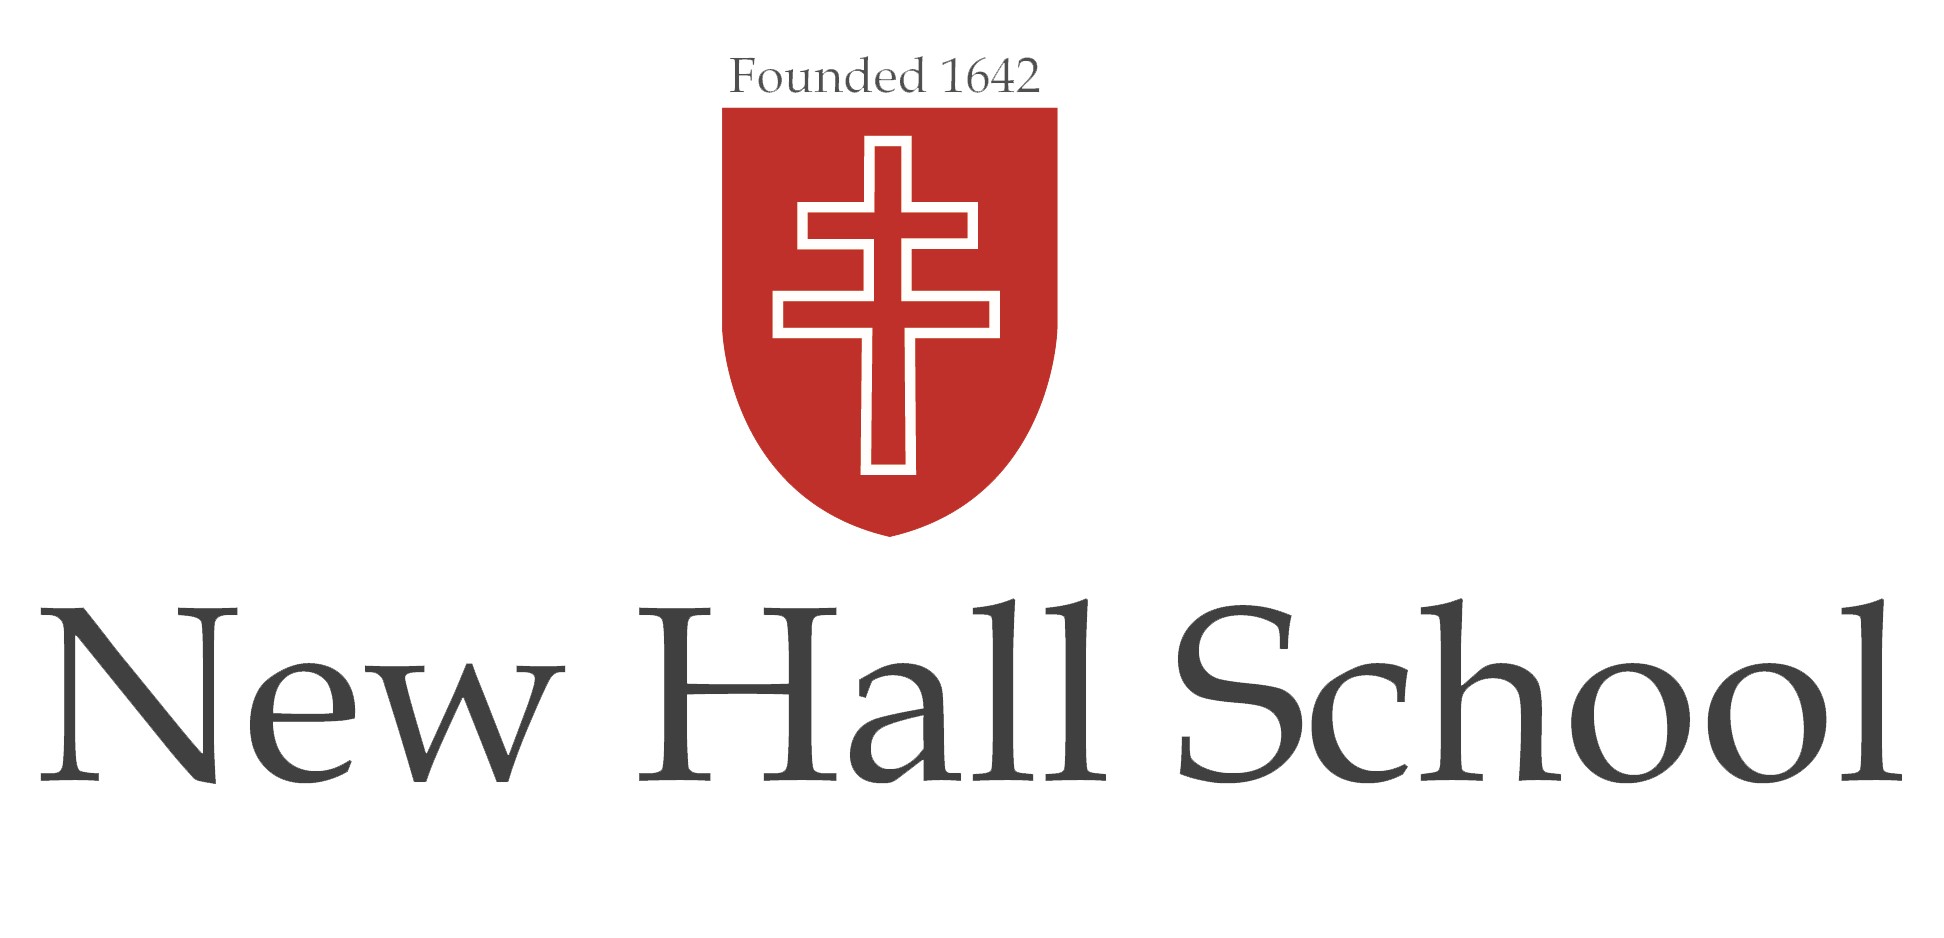 New Hall School